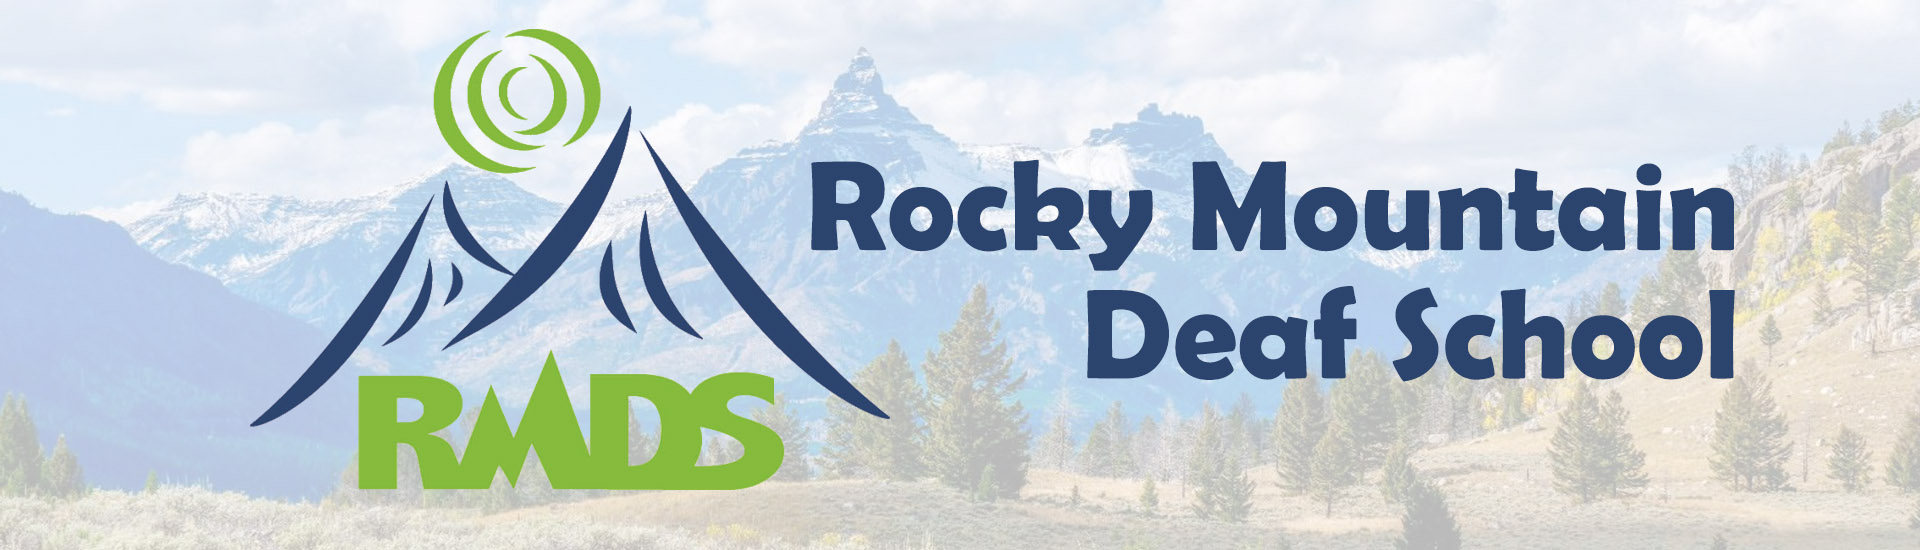 Image for Rocky Mountain Deaf School